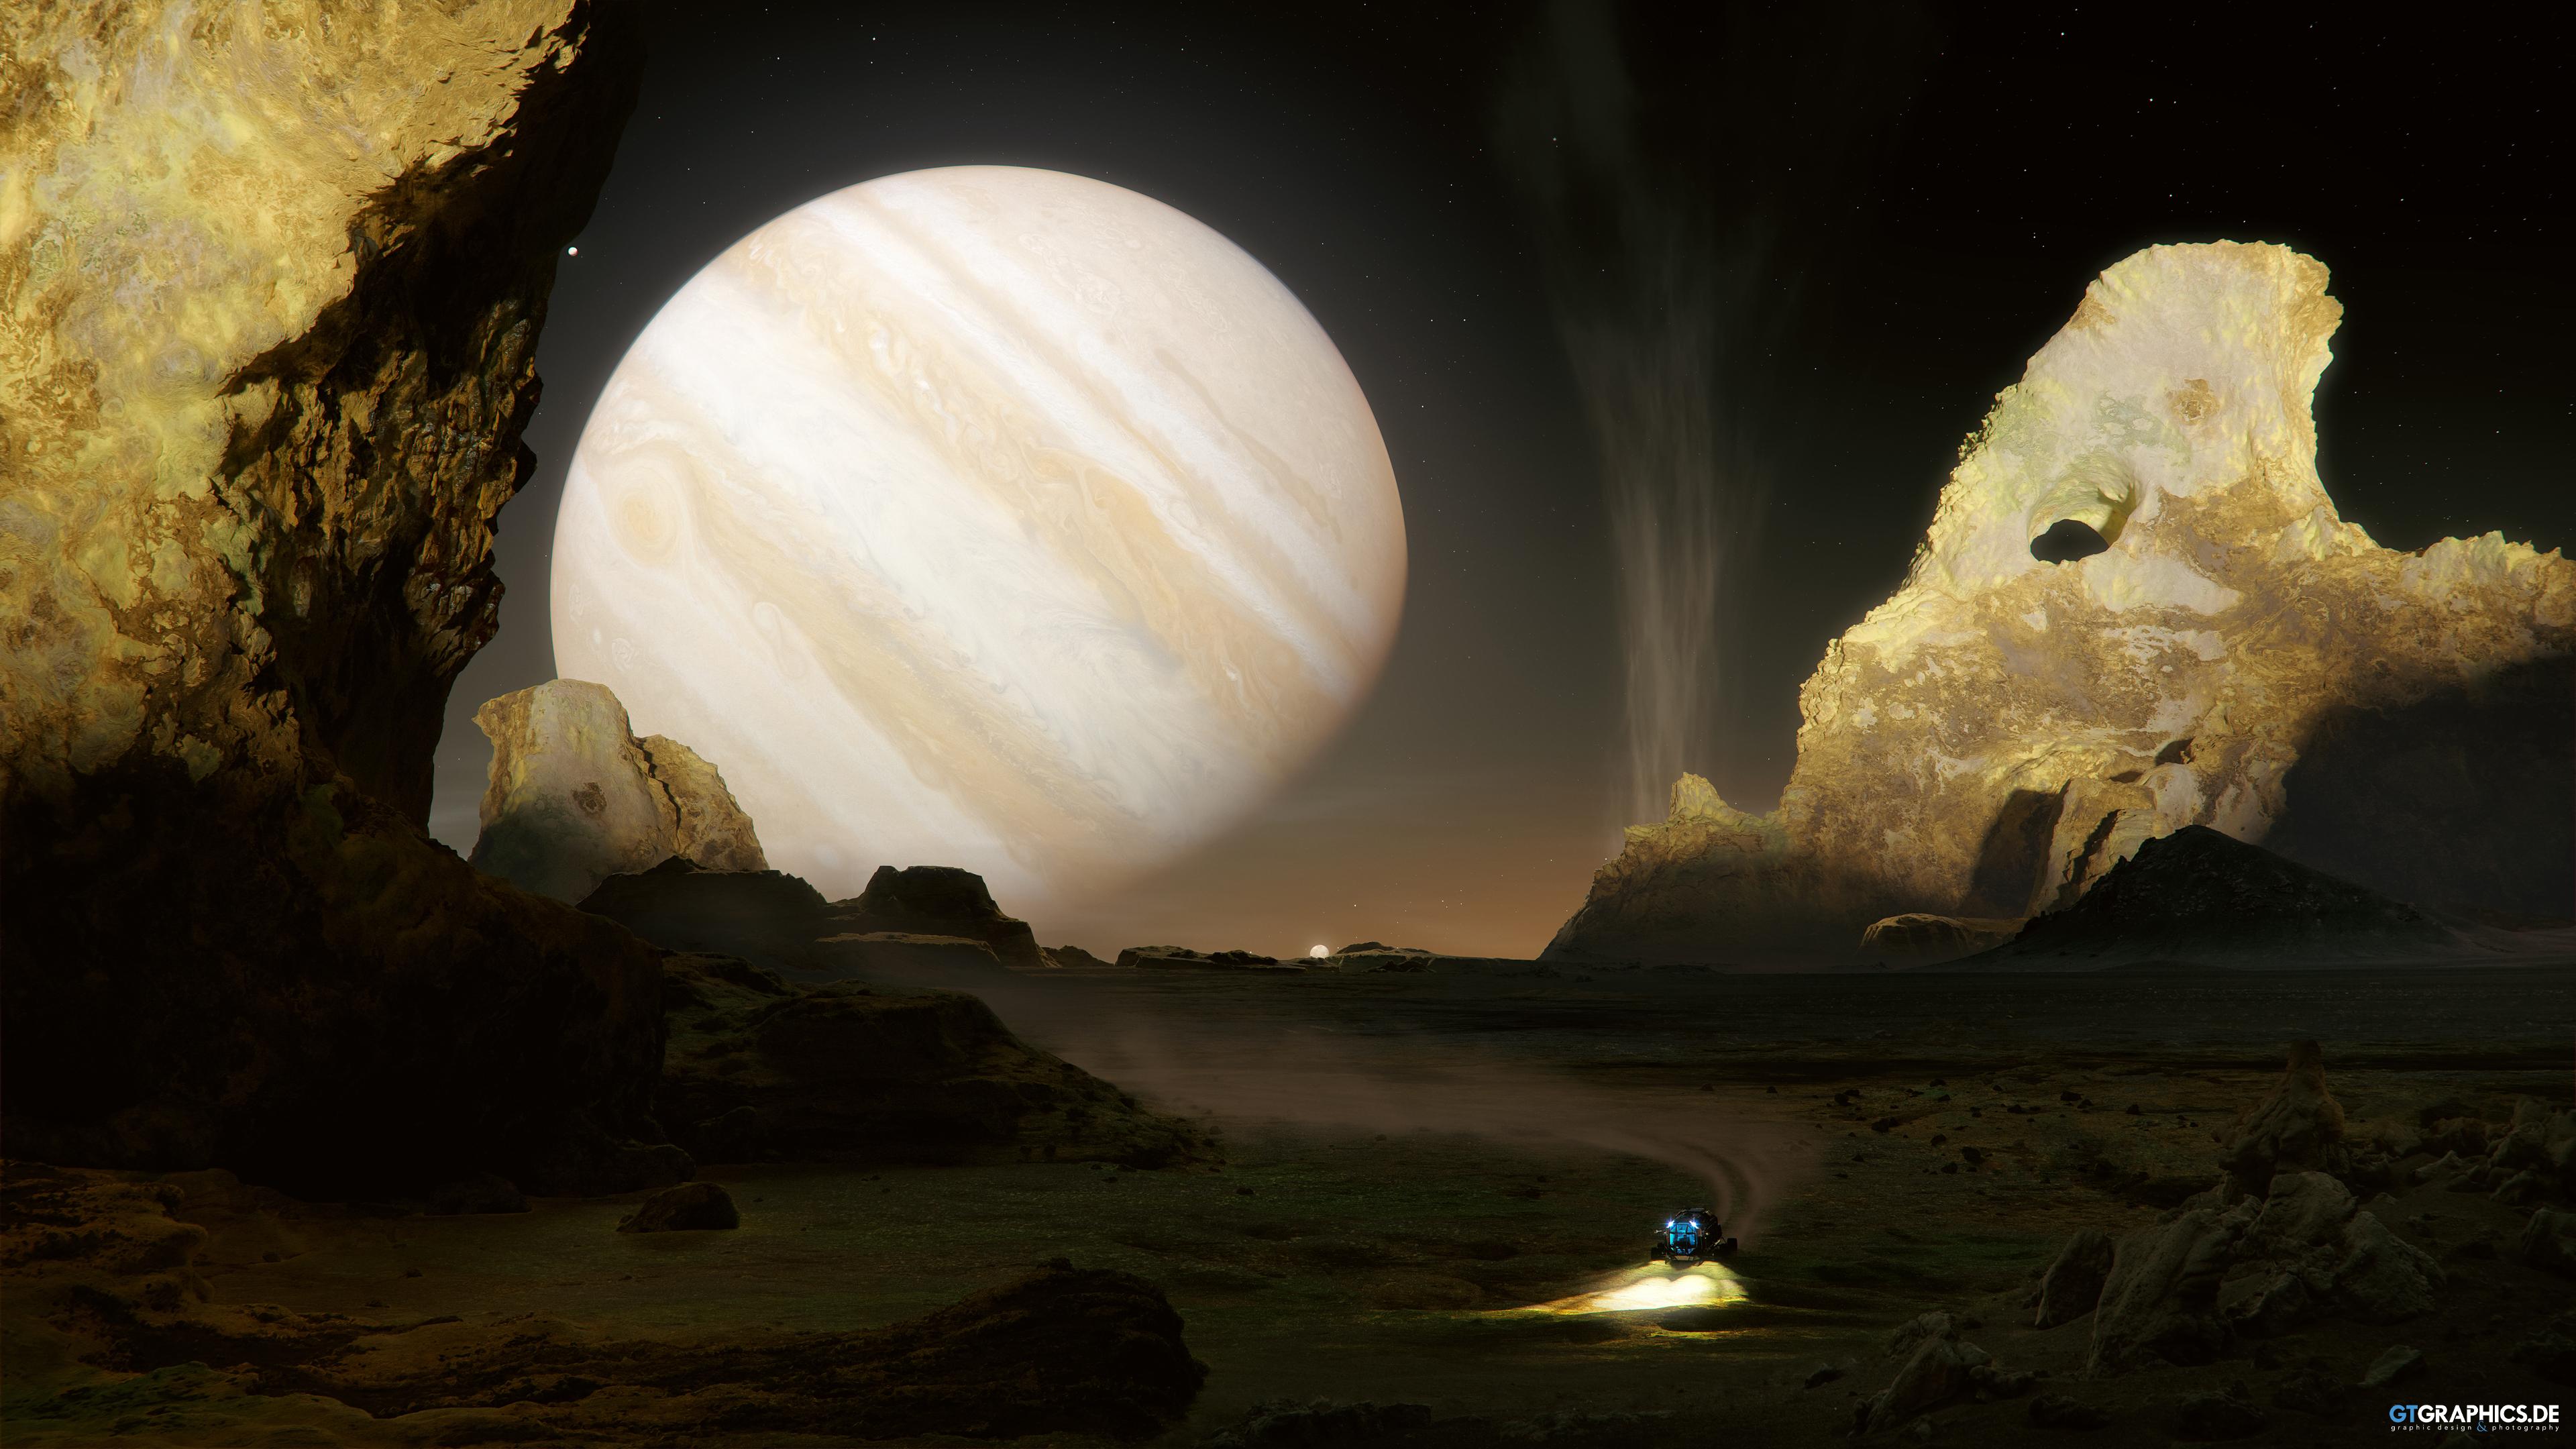 General 3840x2160 GTGraphics digital art artwork illustration CGI space art landscape planet rock formation sunlight vehicle Jupiter stars watermarked 4K space